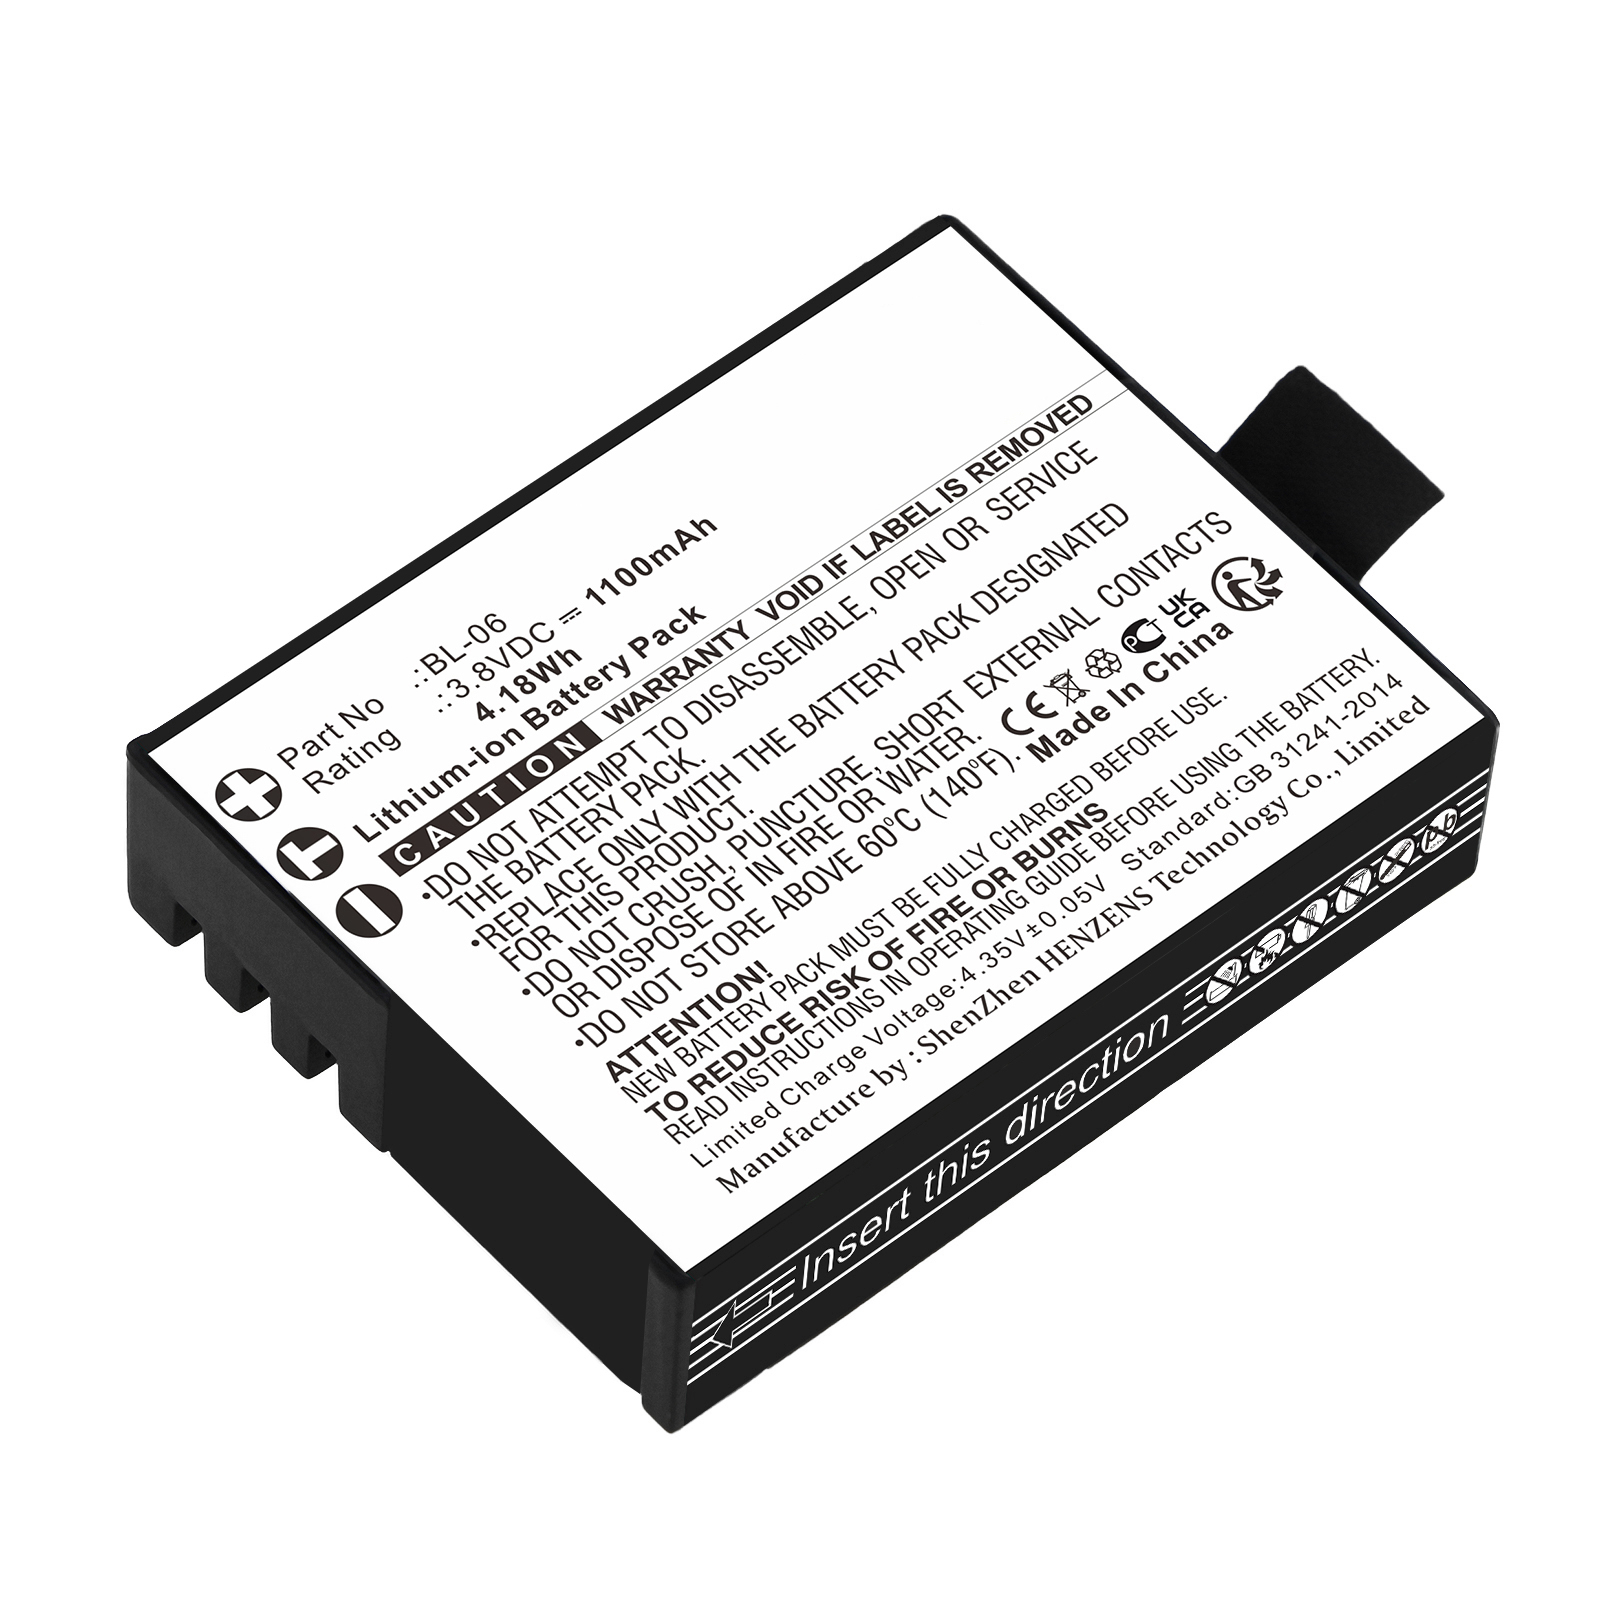 Synergy Digital Digital Camera Battery, Compatible with EZVIZ BL-06 Digital Camera Battery (Li-ion, 3.8V, 1100mAh)